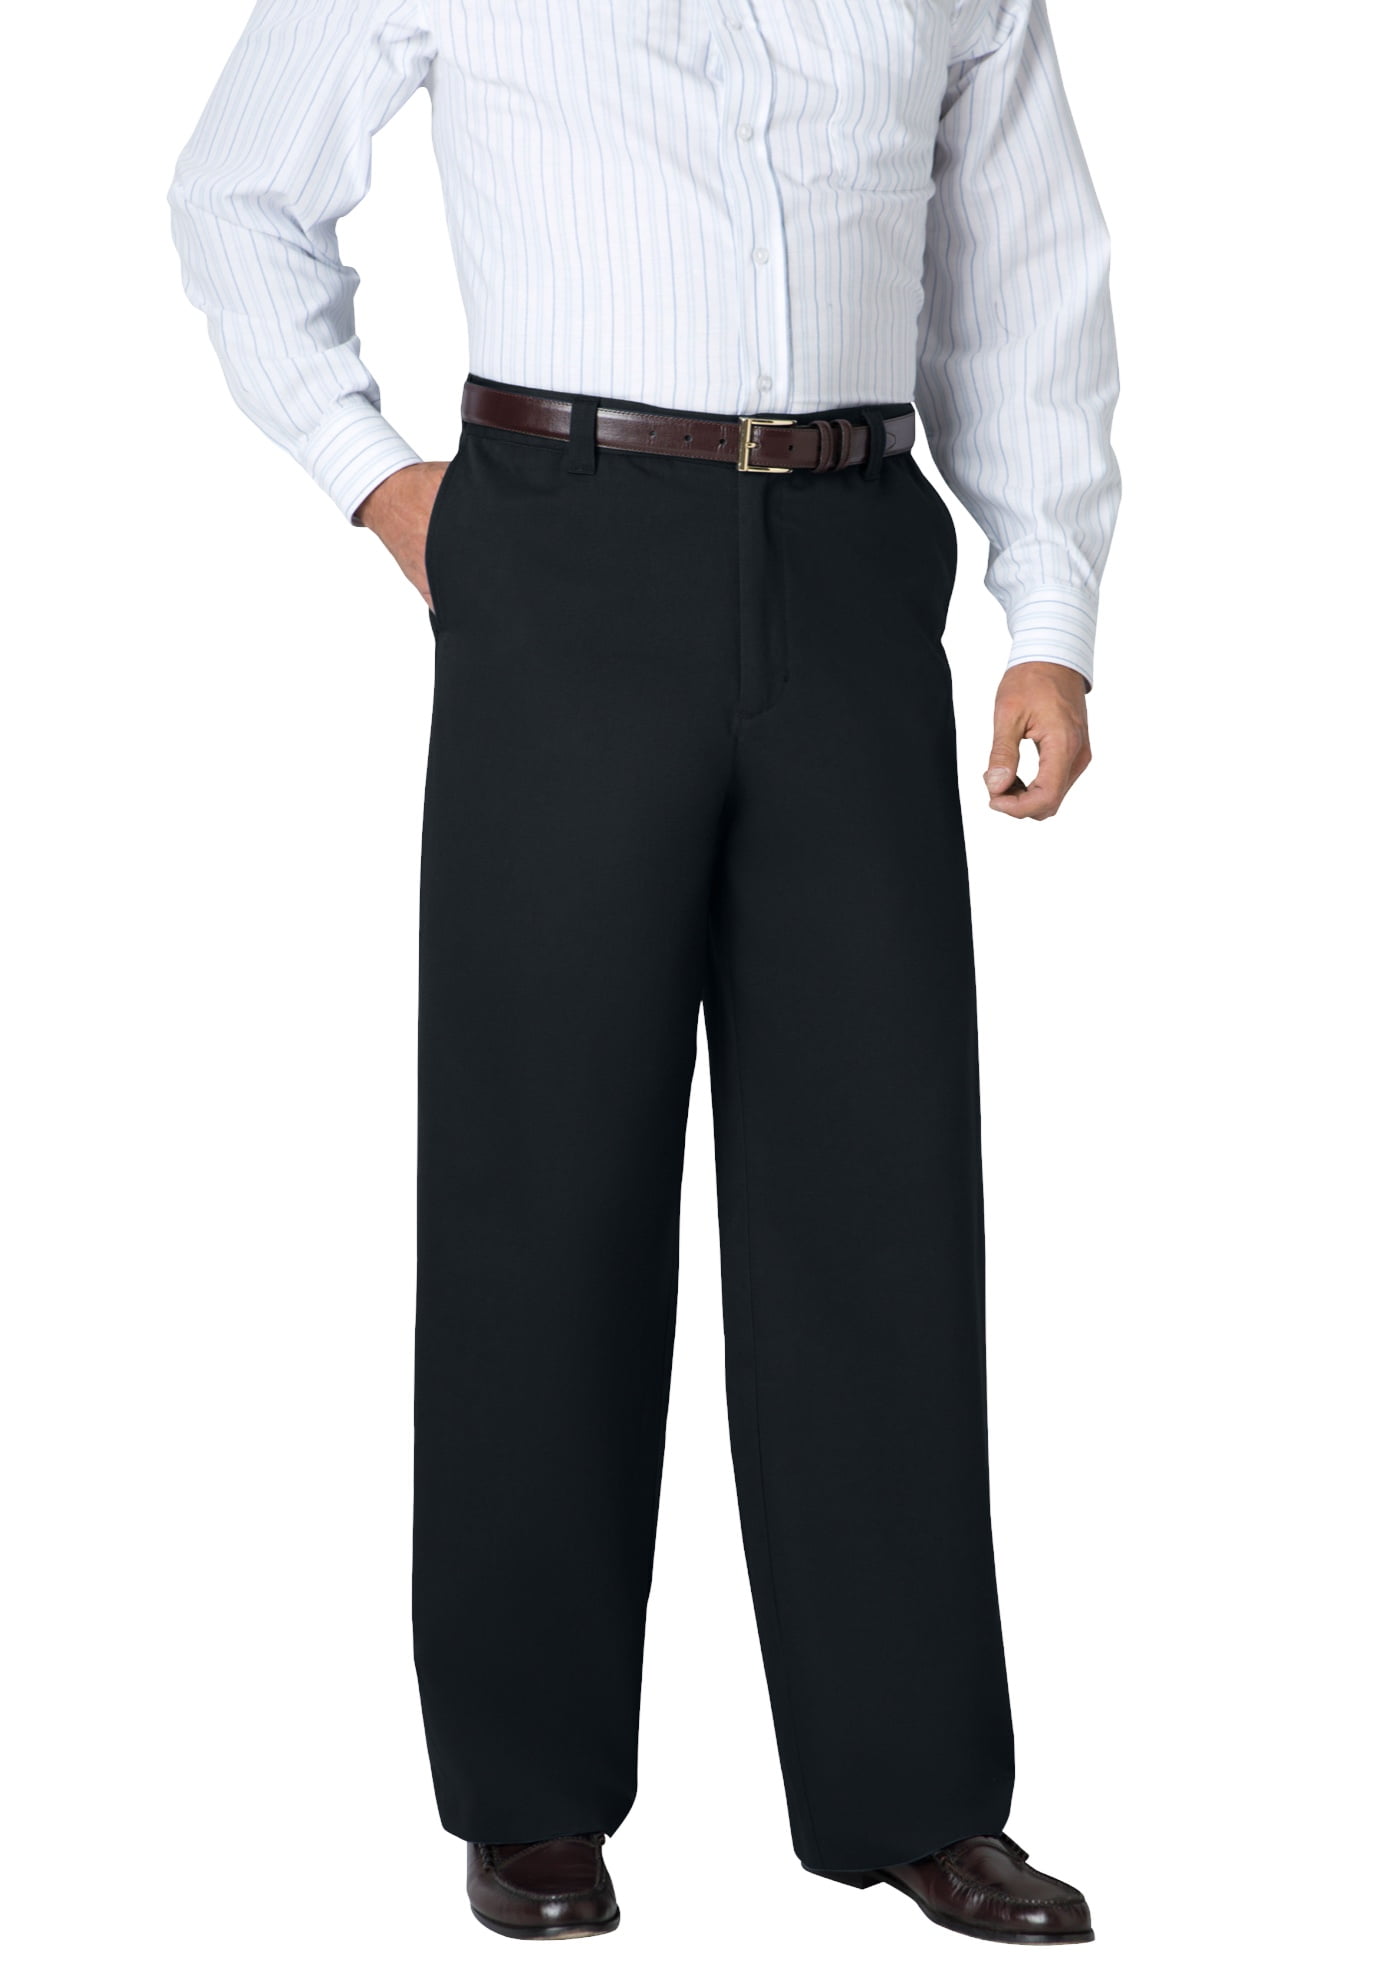 AKA Men's Wrinkle Free Cotton Twill - Traditional Fit Slacks Flat-Front  Work Pants Khaki 31 Long - Walmart.com